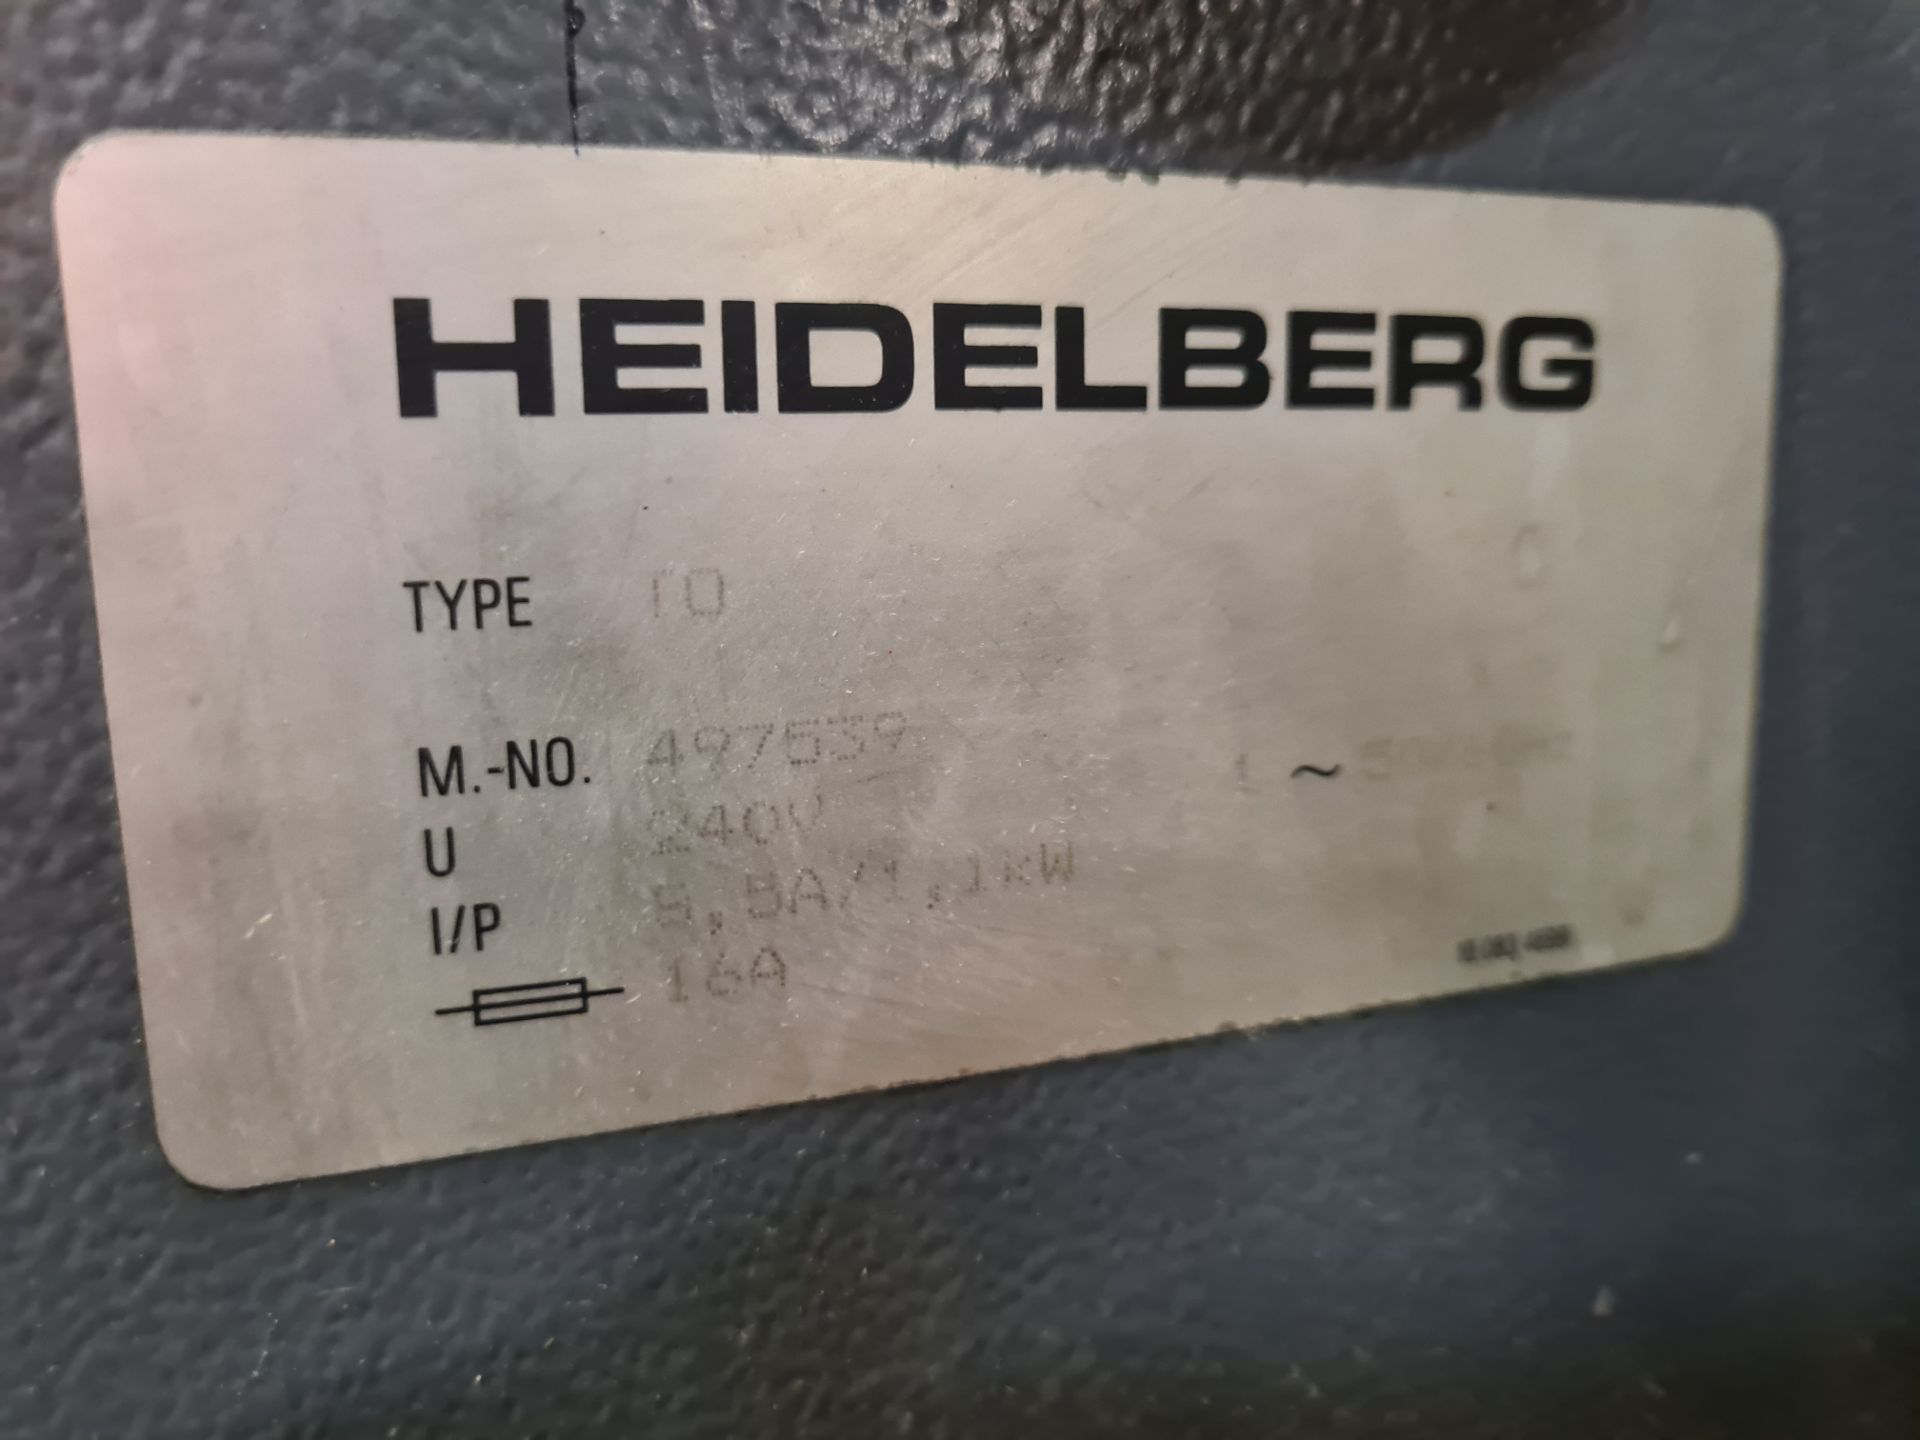 Heidelberg Type TO 28 x 39cm Single Colour Offset Printing Press, machine no. 497539, total no. of - Image 7 of 7